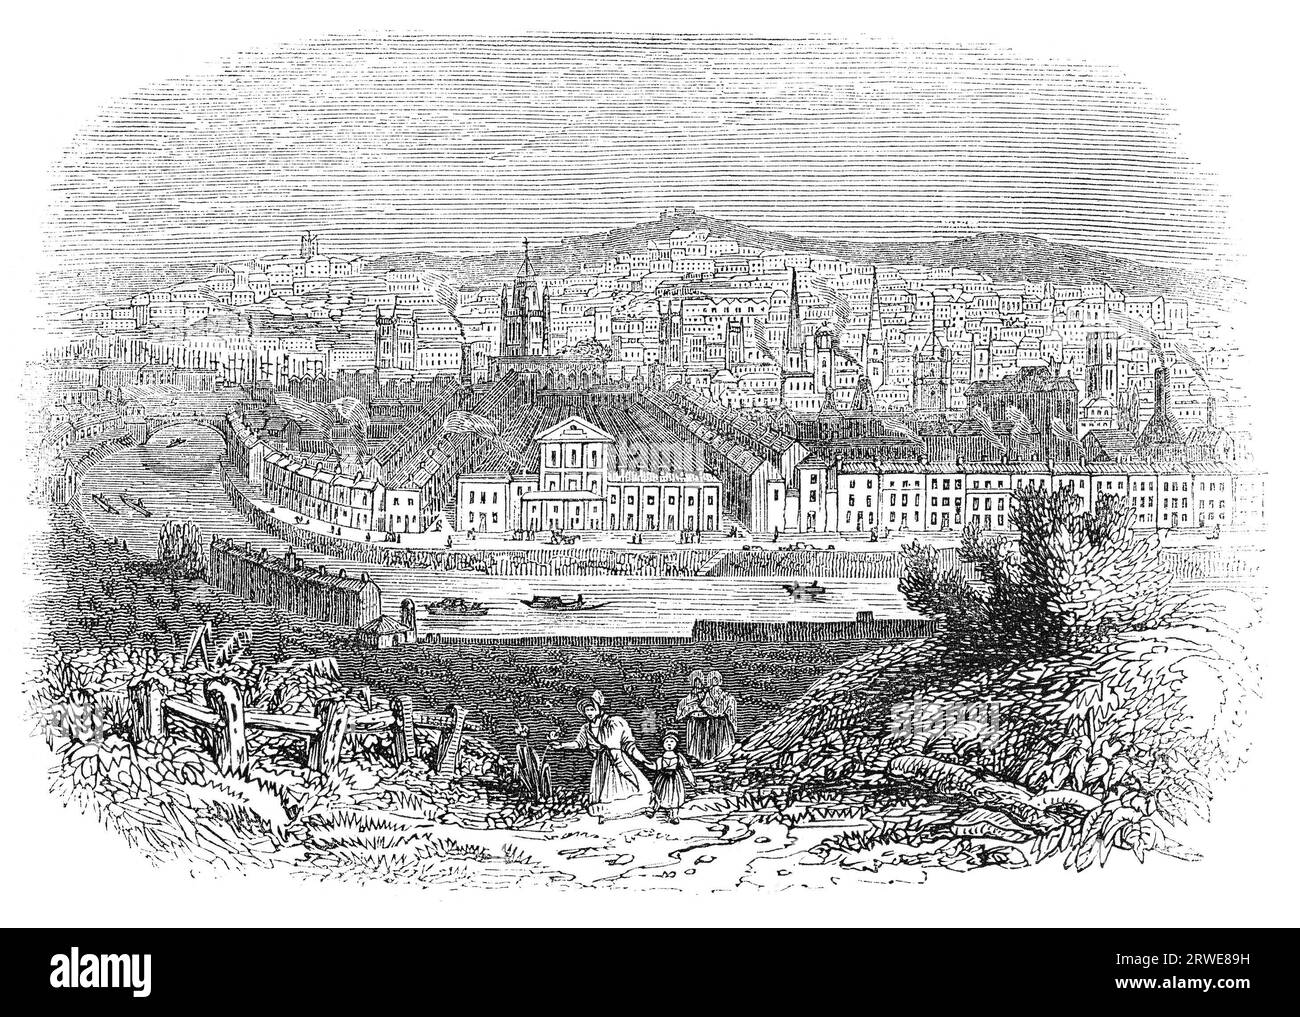 Bristol im 17. Jahrhundert. Gravur aus dem Penny Magazine, juni 1843 Stockfoto